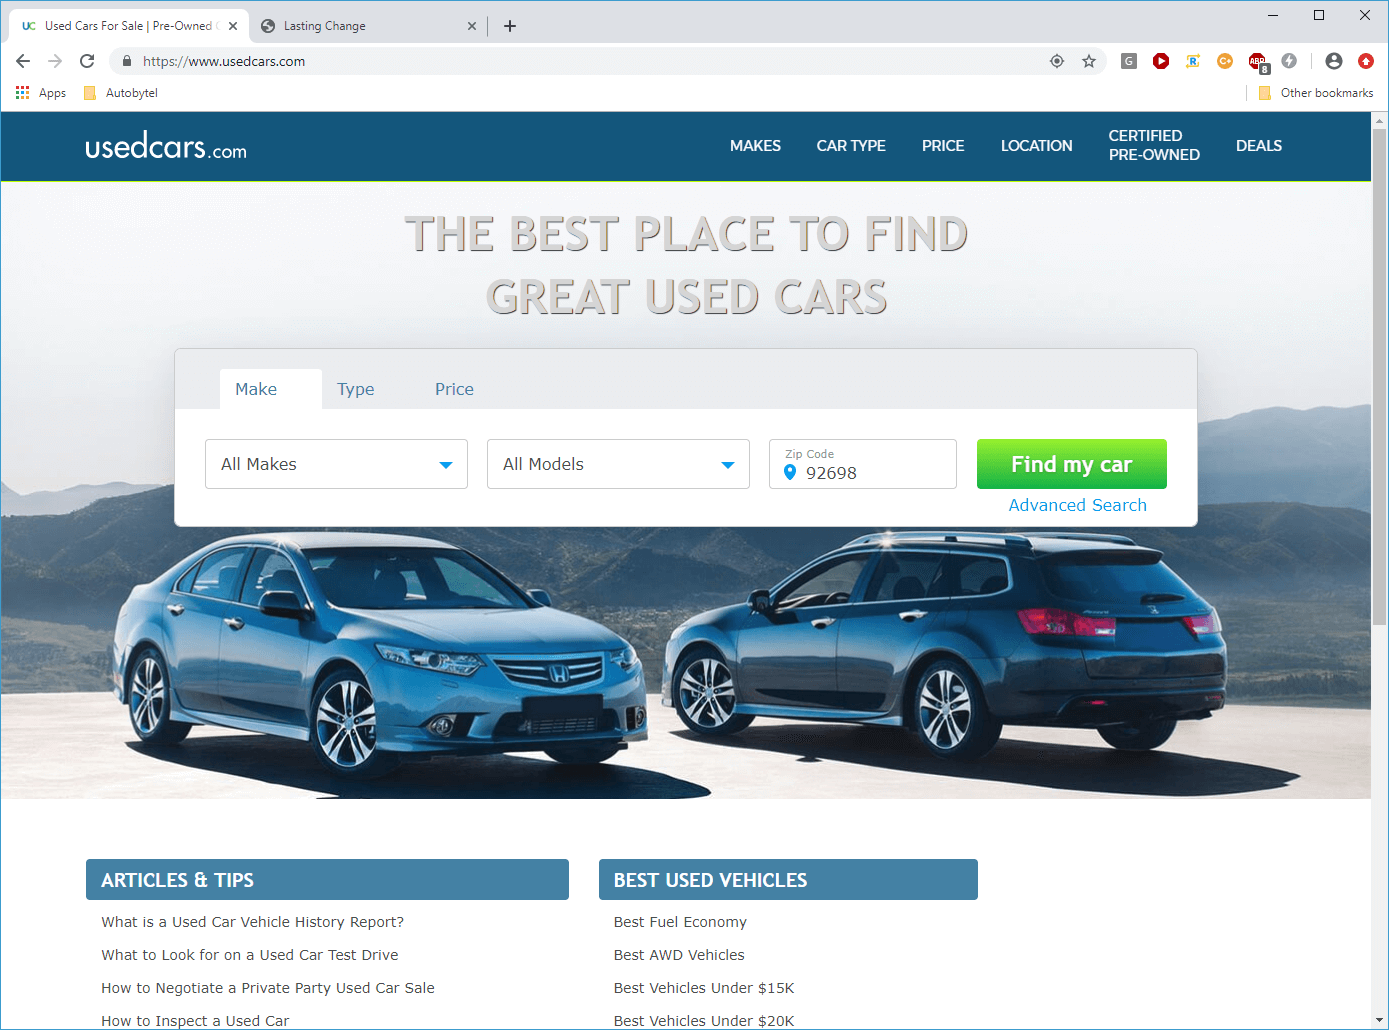 UsedCars.com